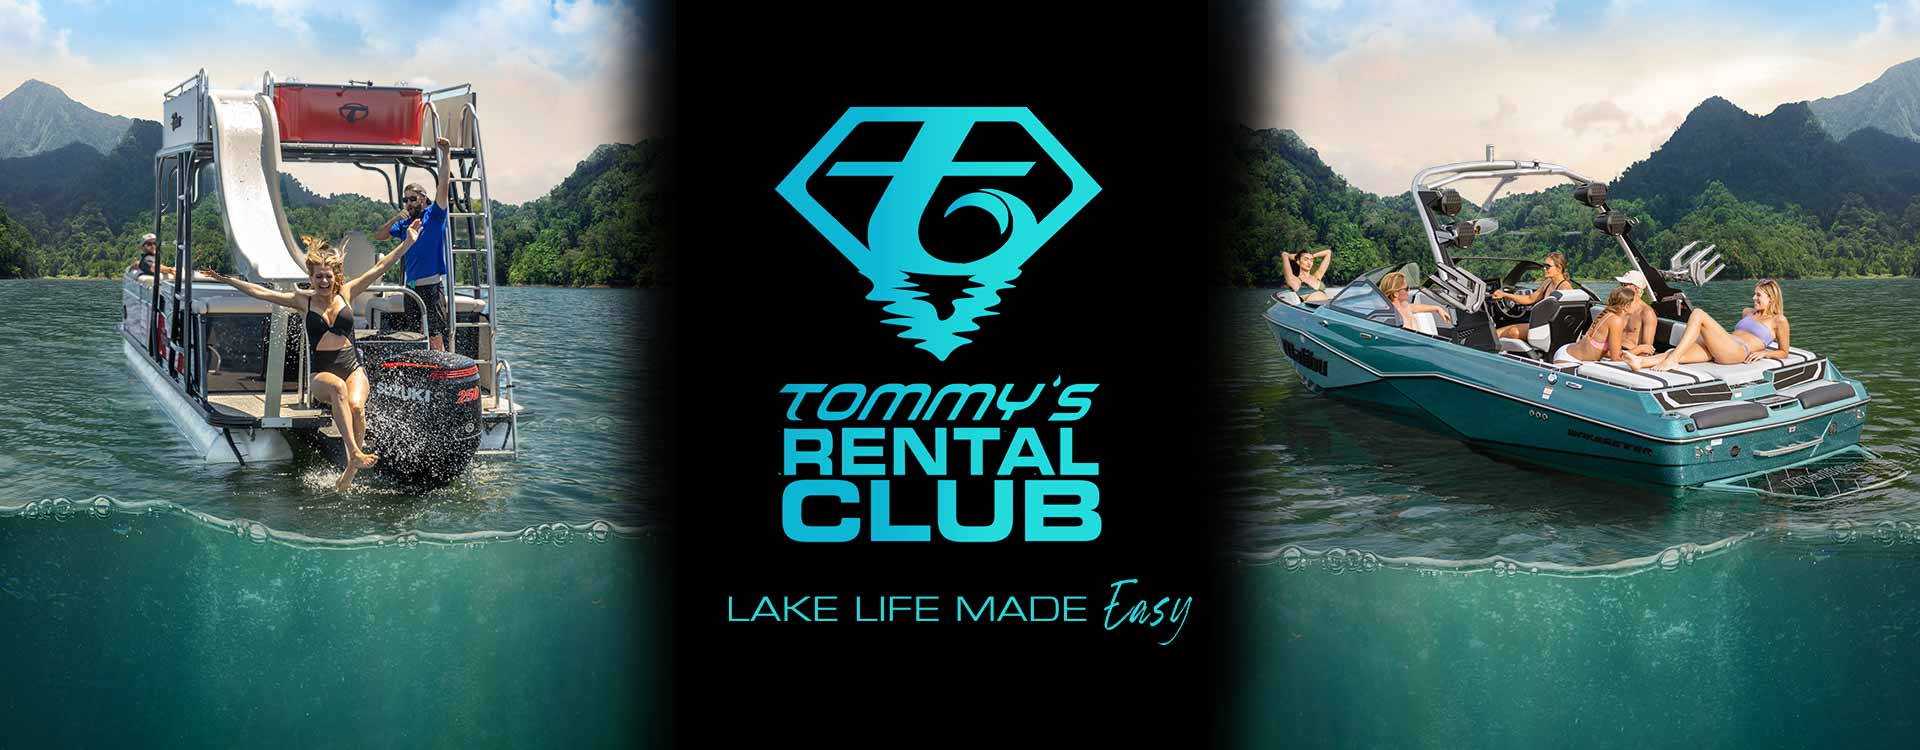 Tommy's Rental Club - Boat Memberships